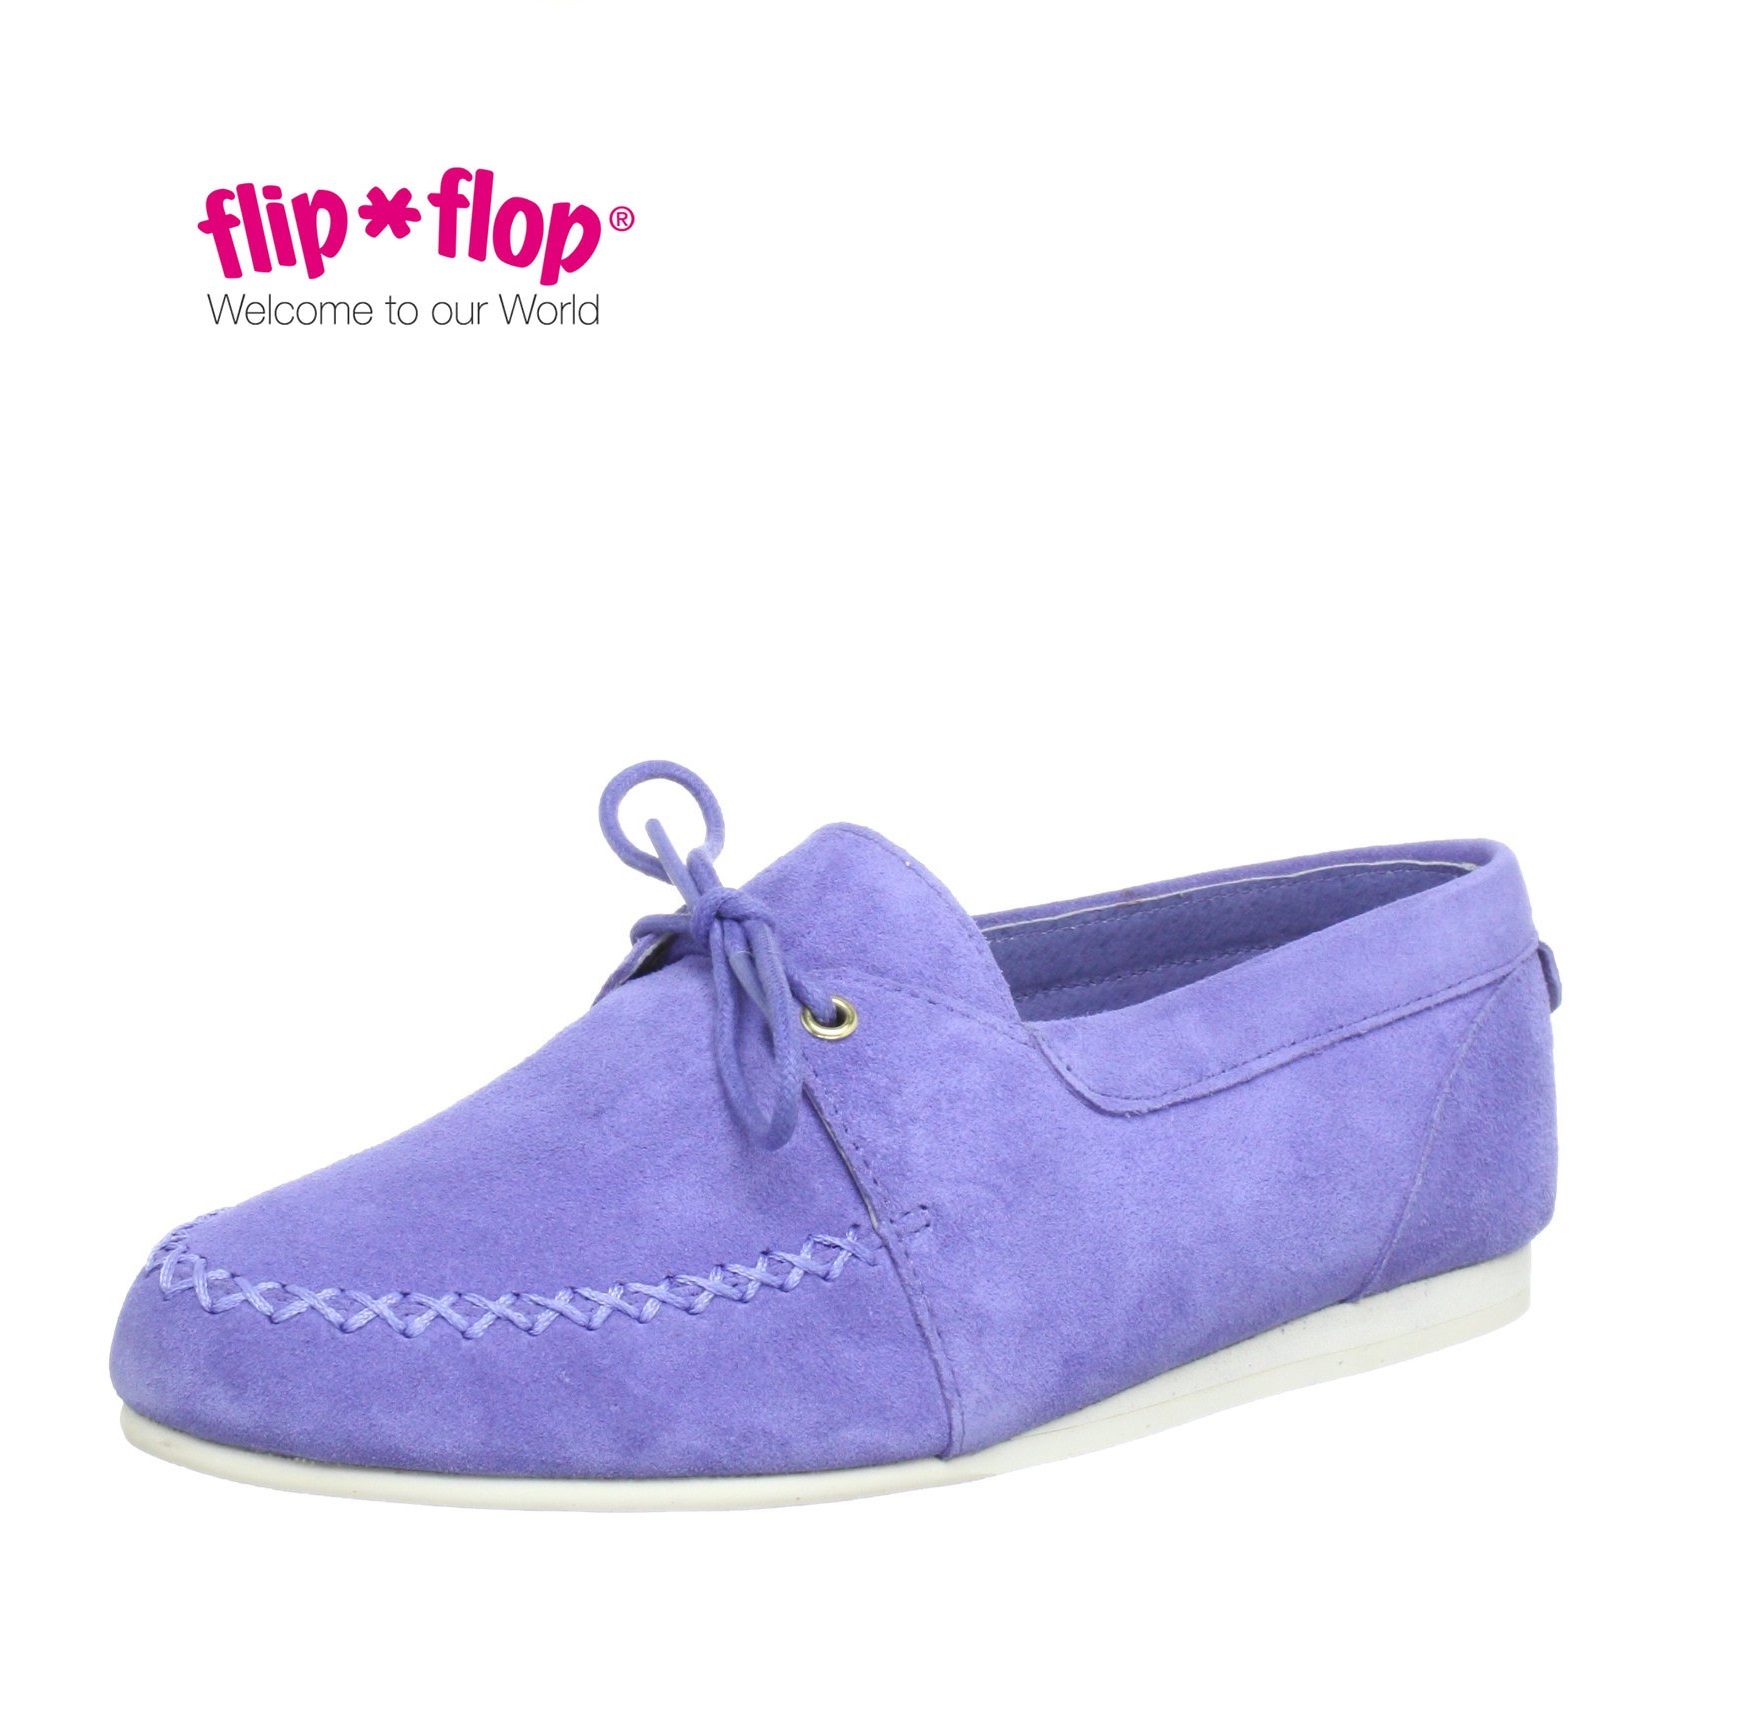 flip*flop 超舒适紫罗兰色单鞋